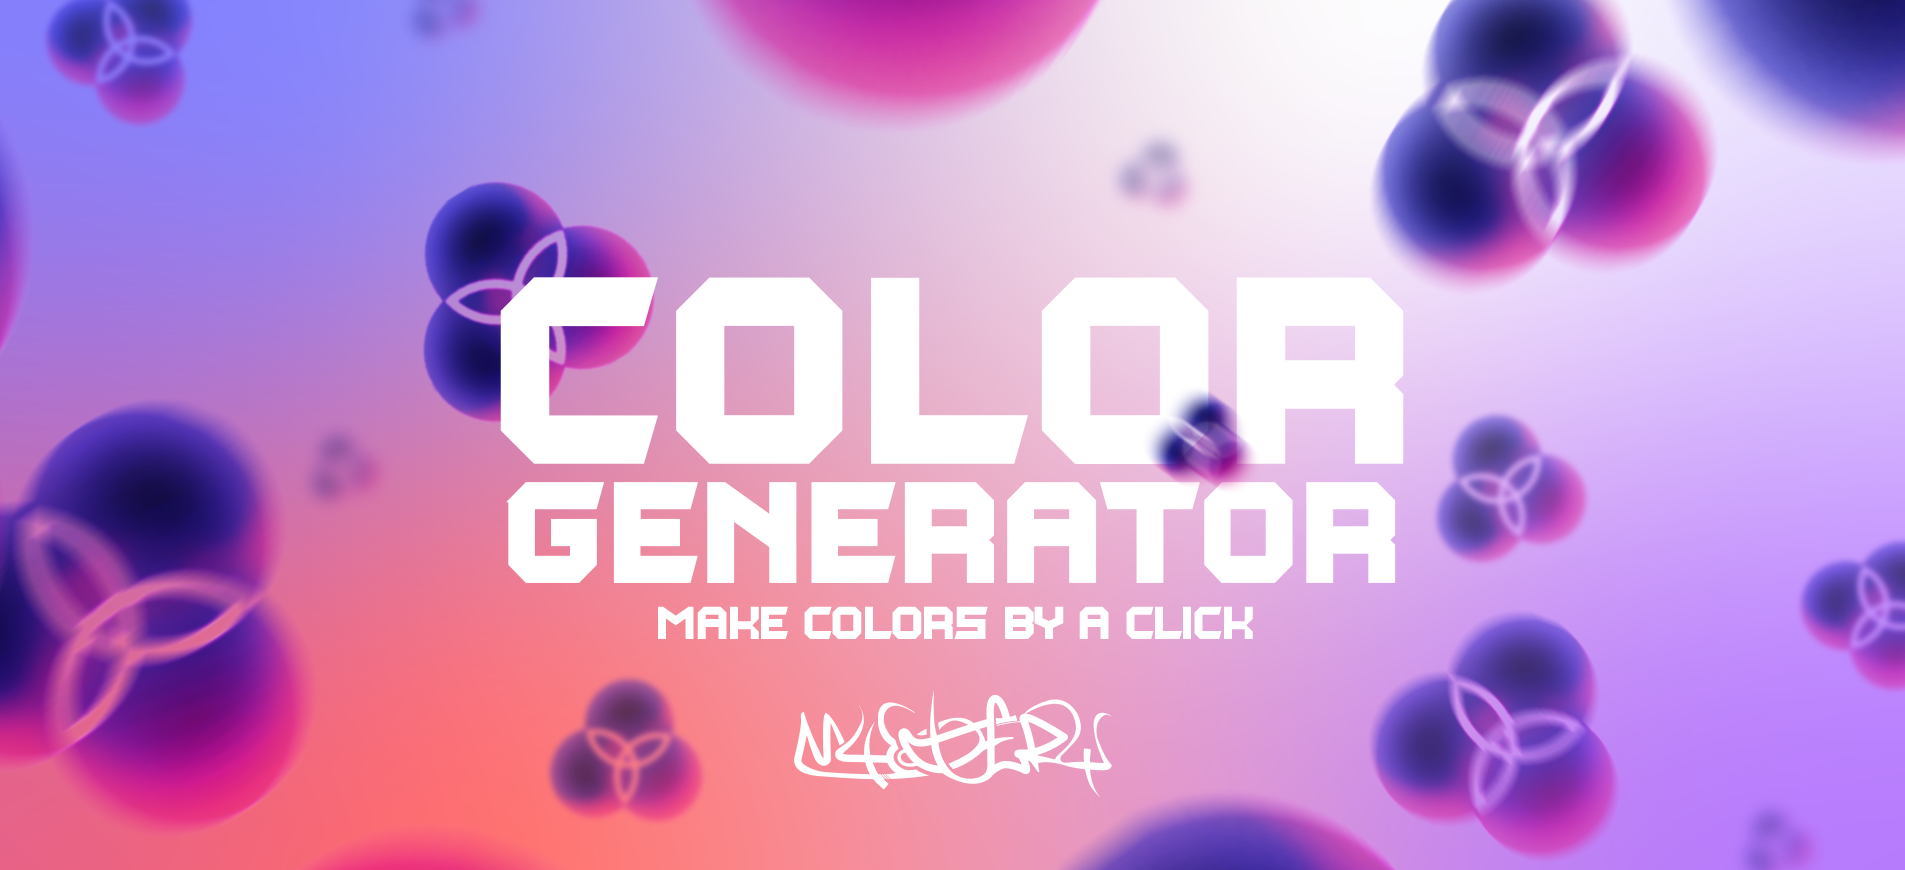 color generator banner image